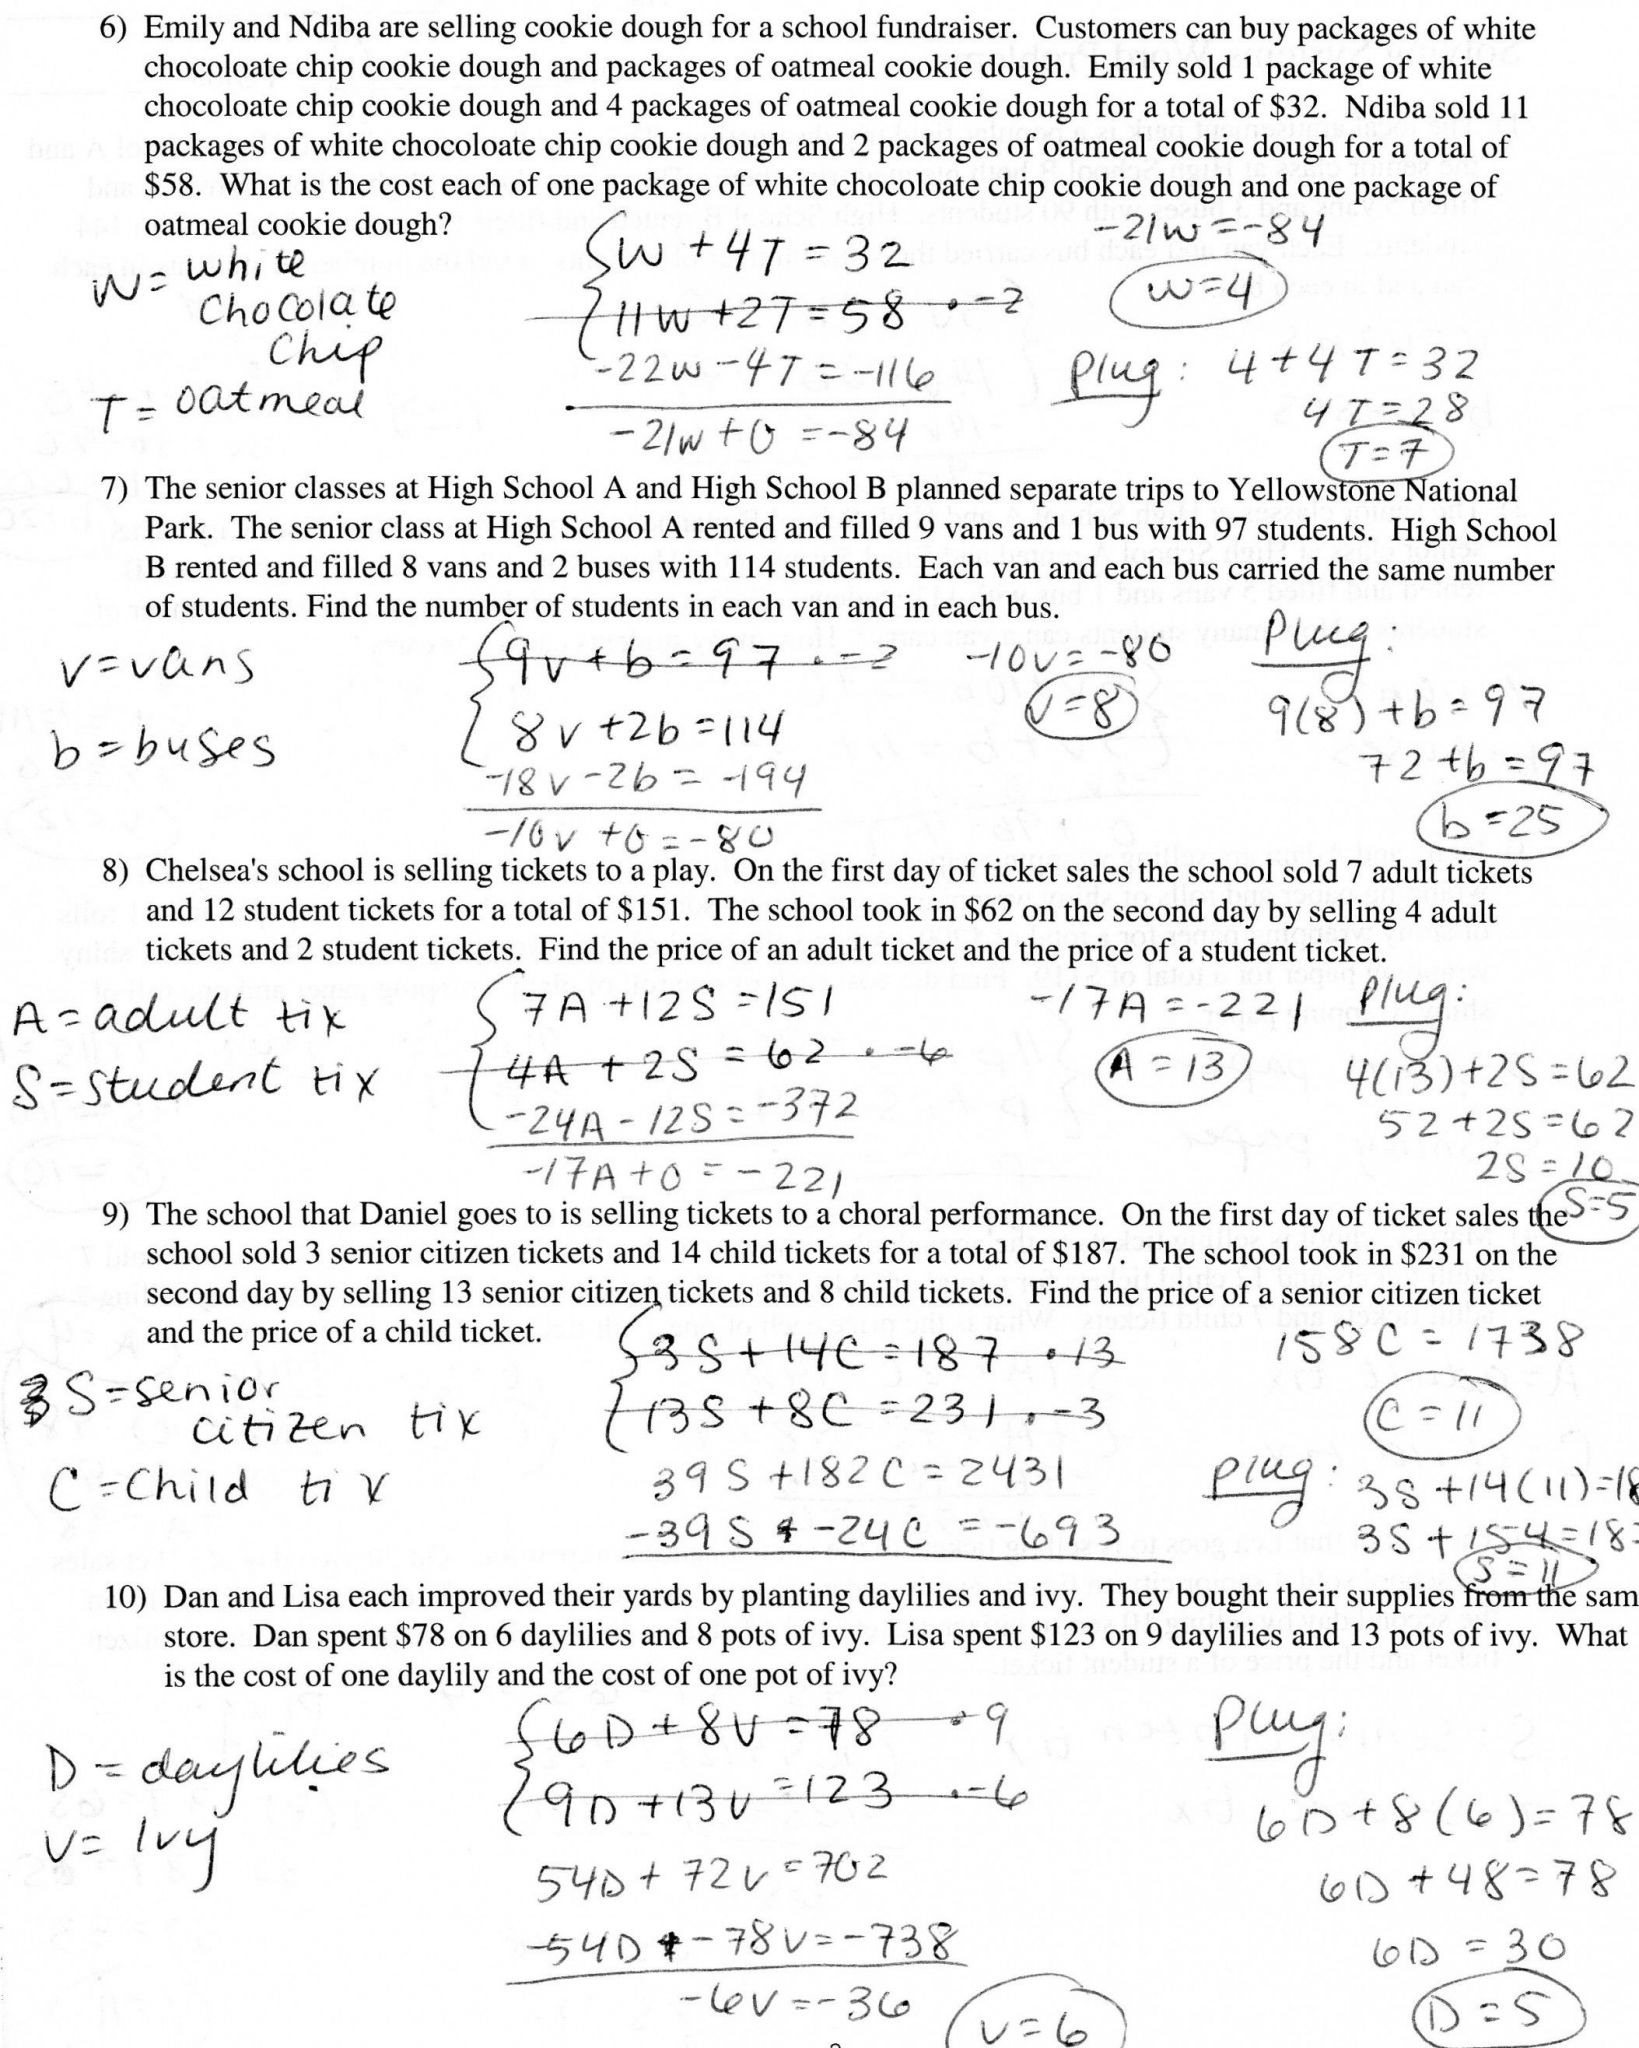 2 3 formulas and problem solving answer key